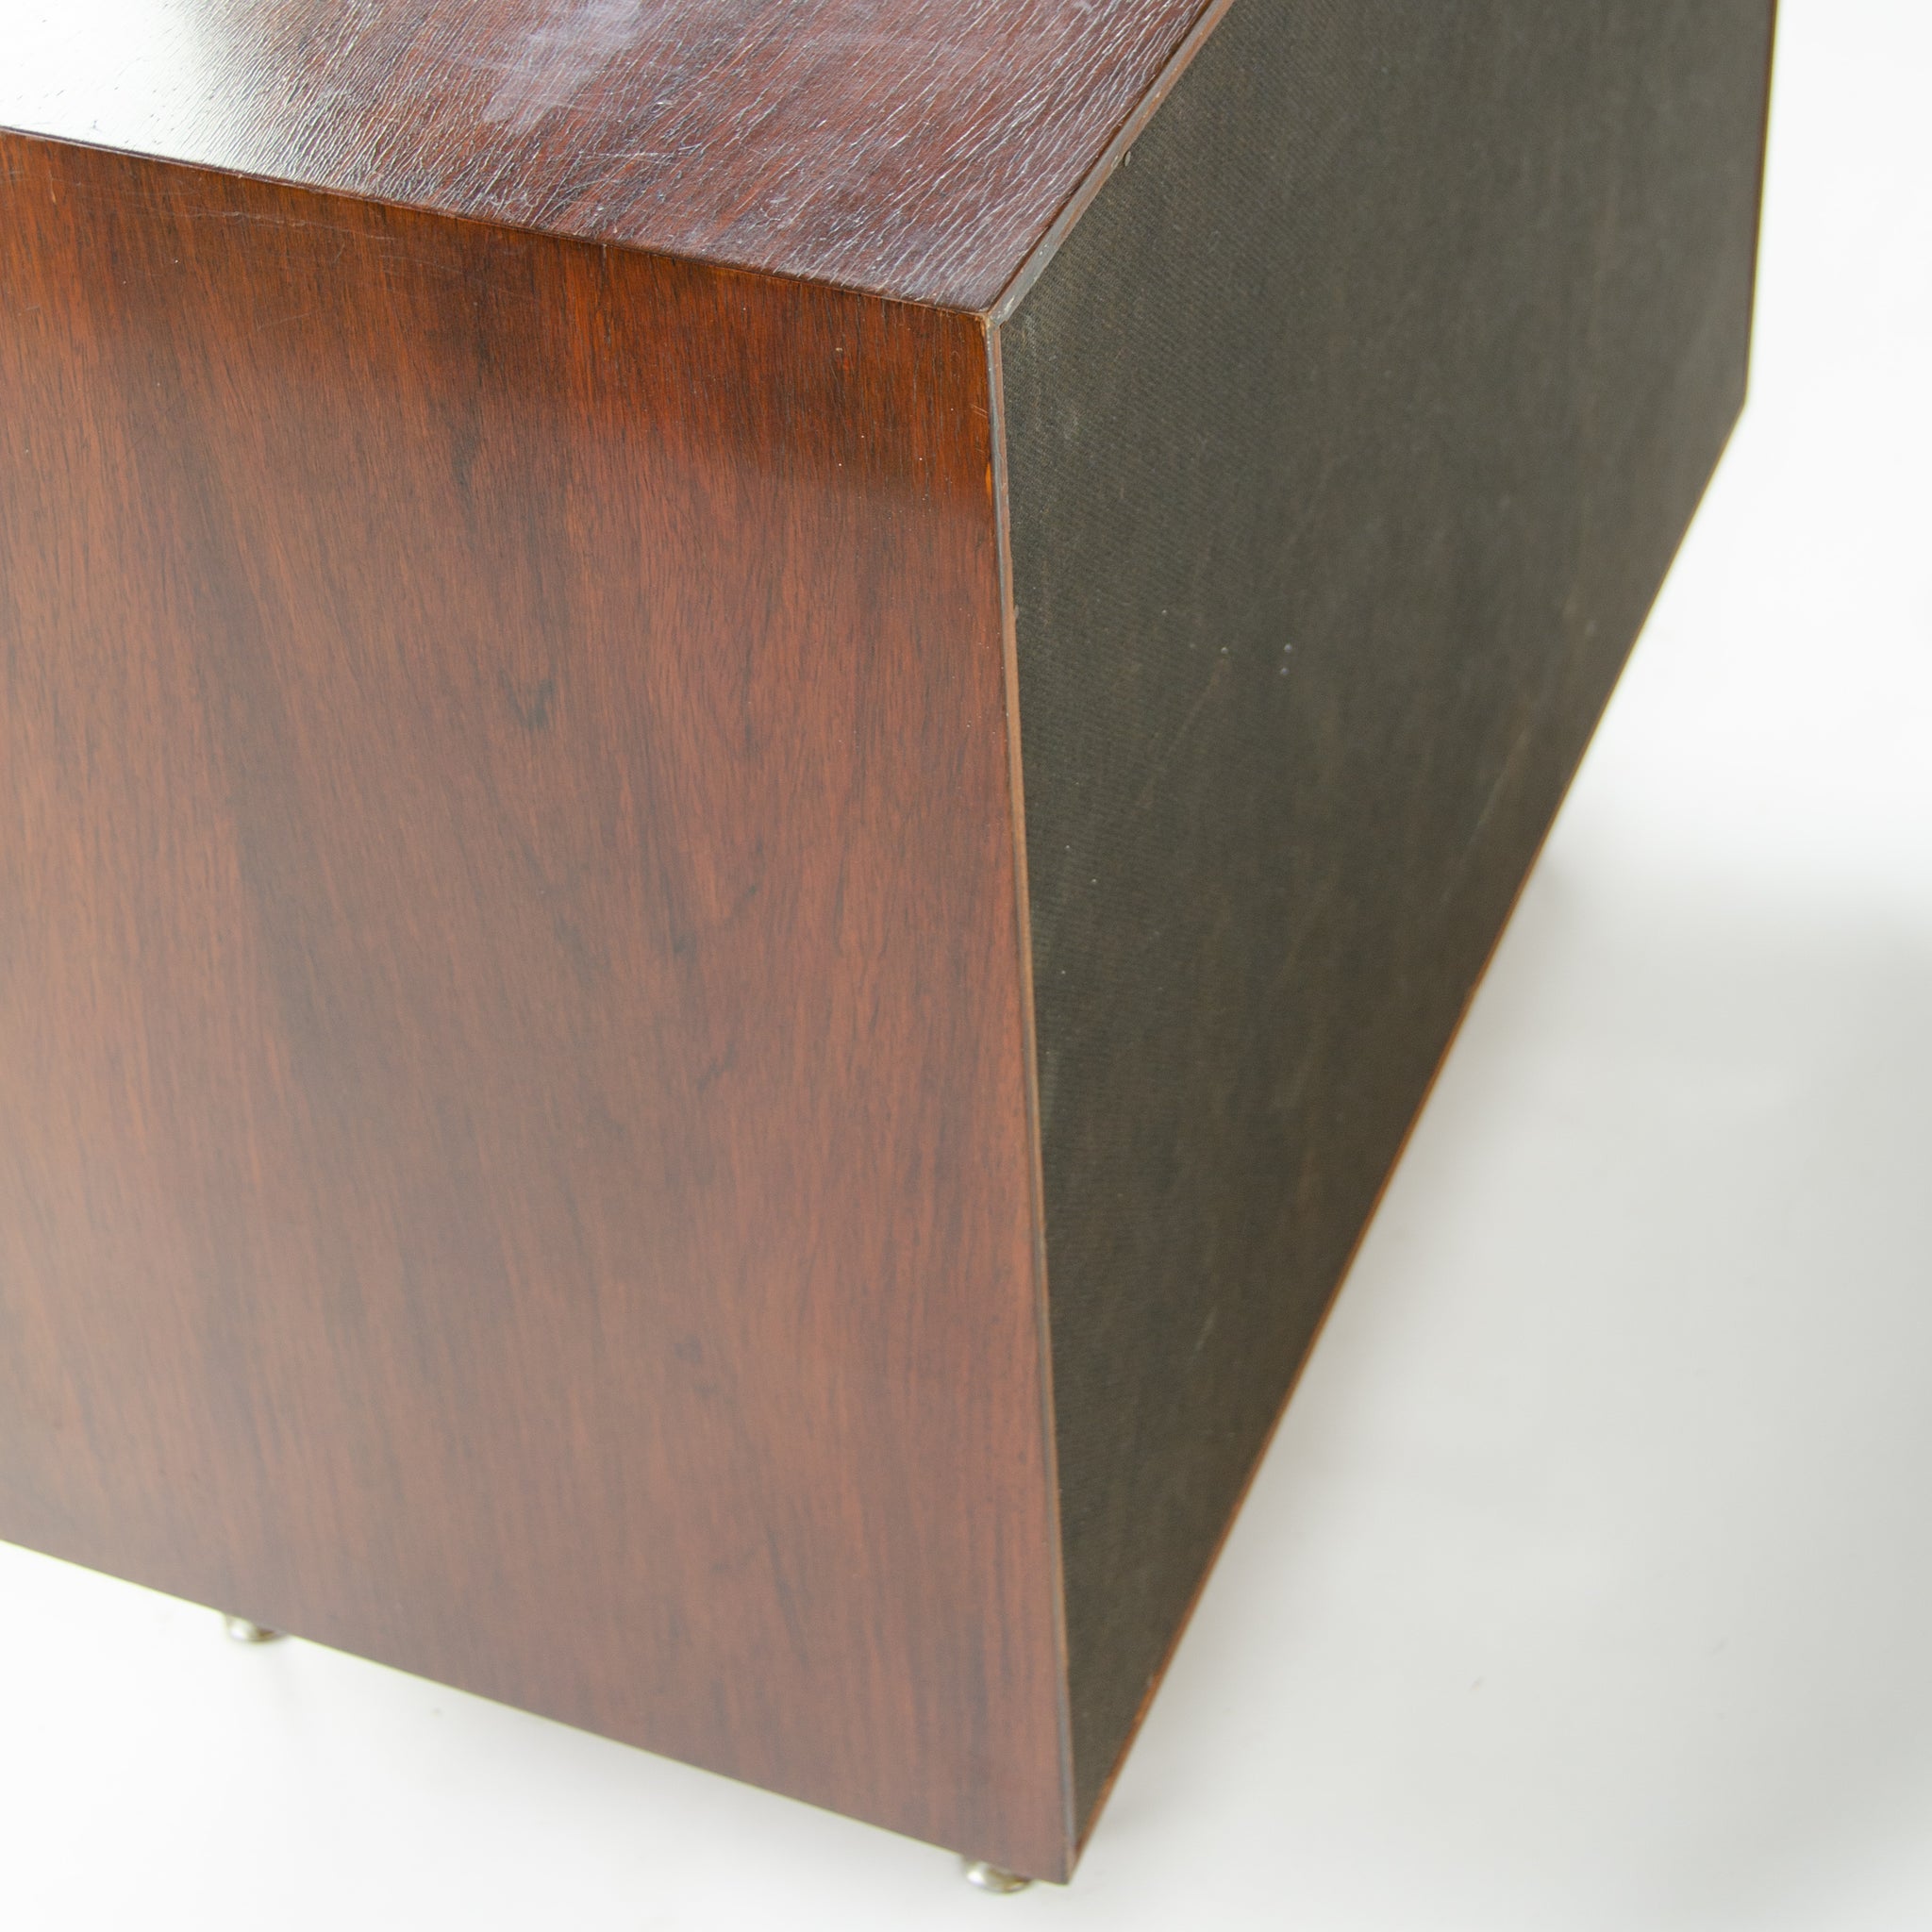 SOLD 1950s George Nelson Herman Miller Thin Edge Rosewood Dresser Cabinet Original